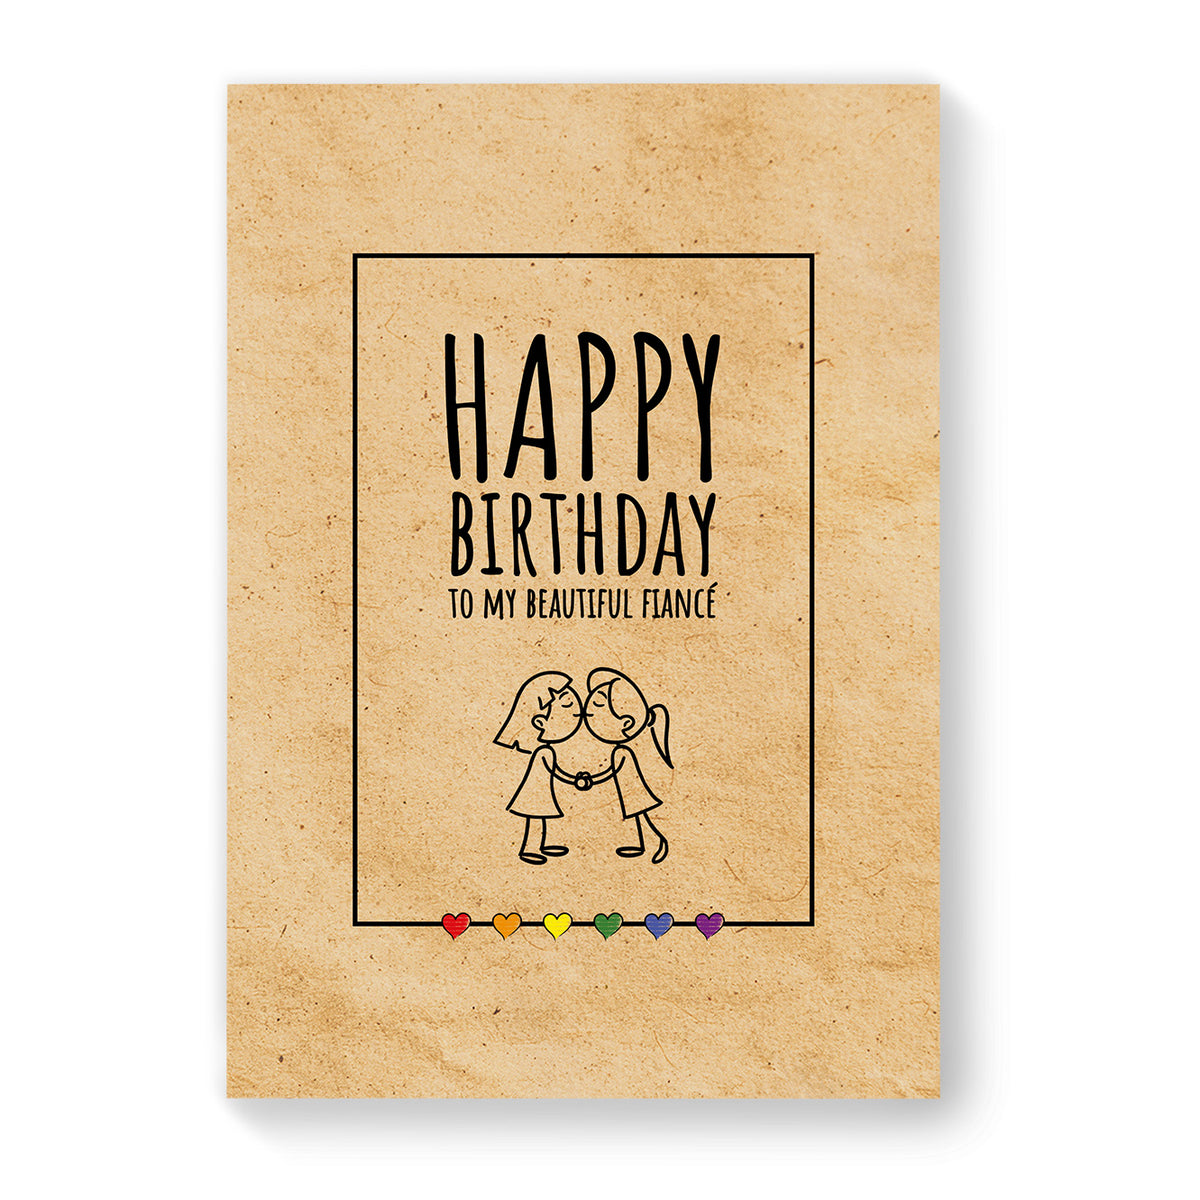 Happy Birthday to my beautiful fiancé - Lesbian Gay Birthday Card - Vintage Brown | Gift